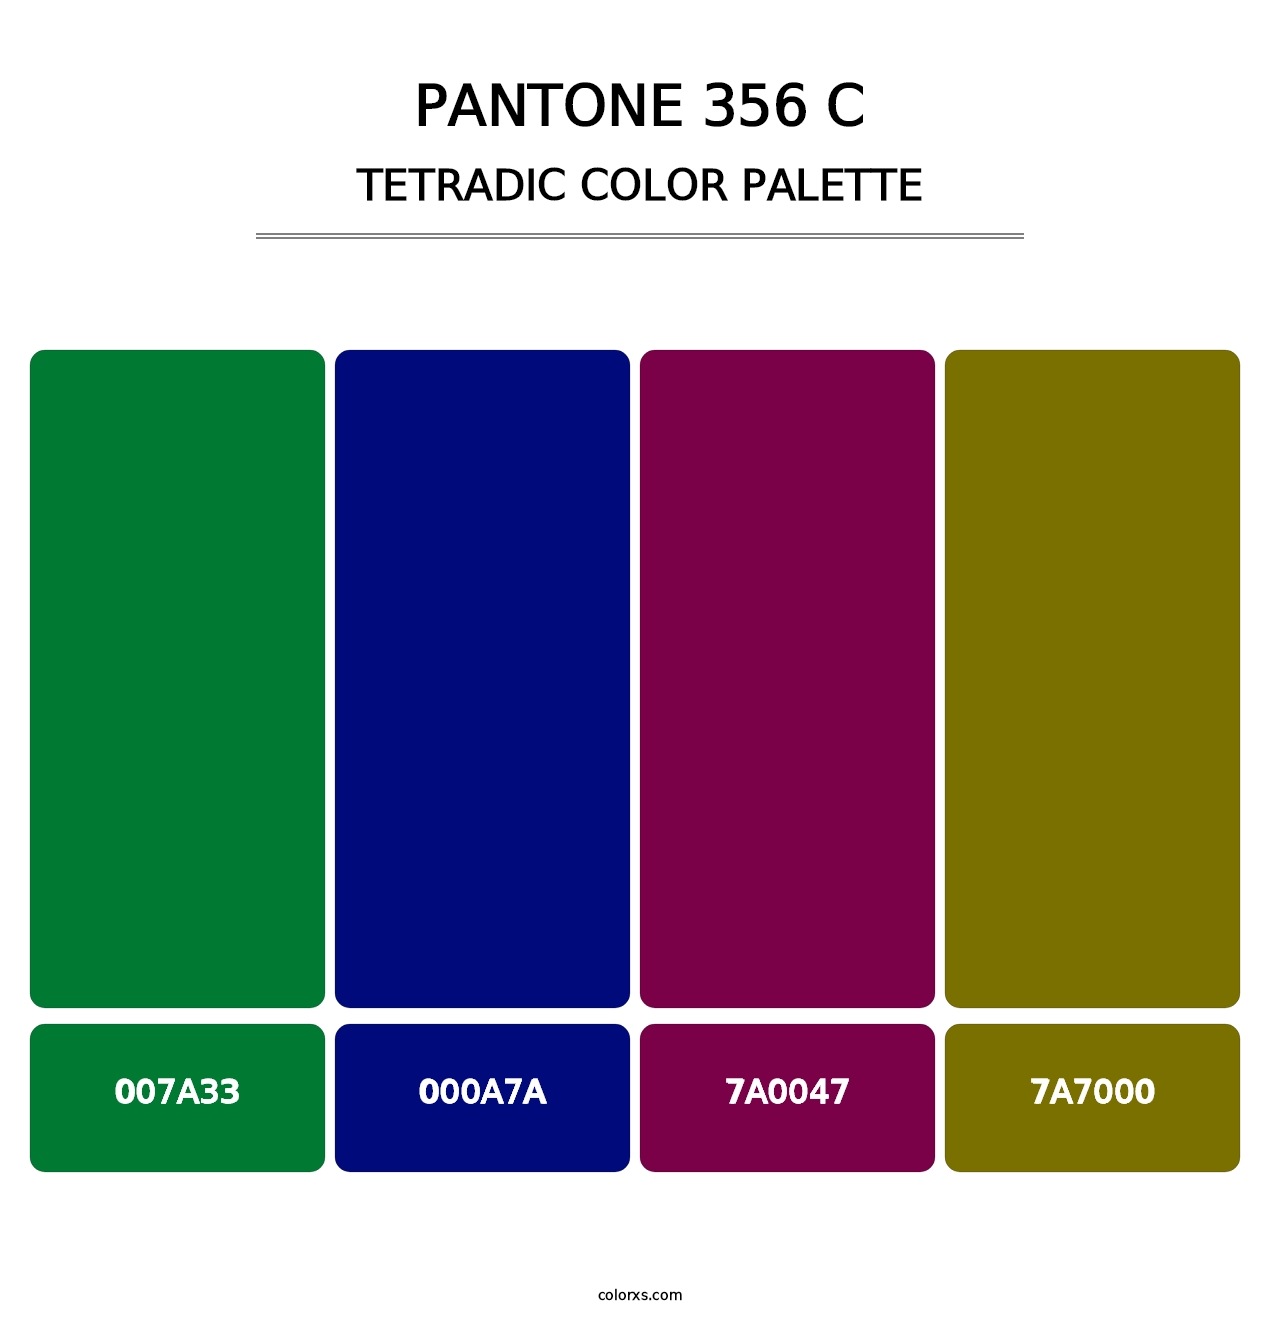 PANTONE 356 C - Tetradic Color Palette